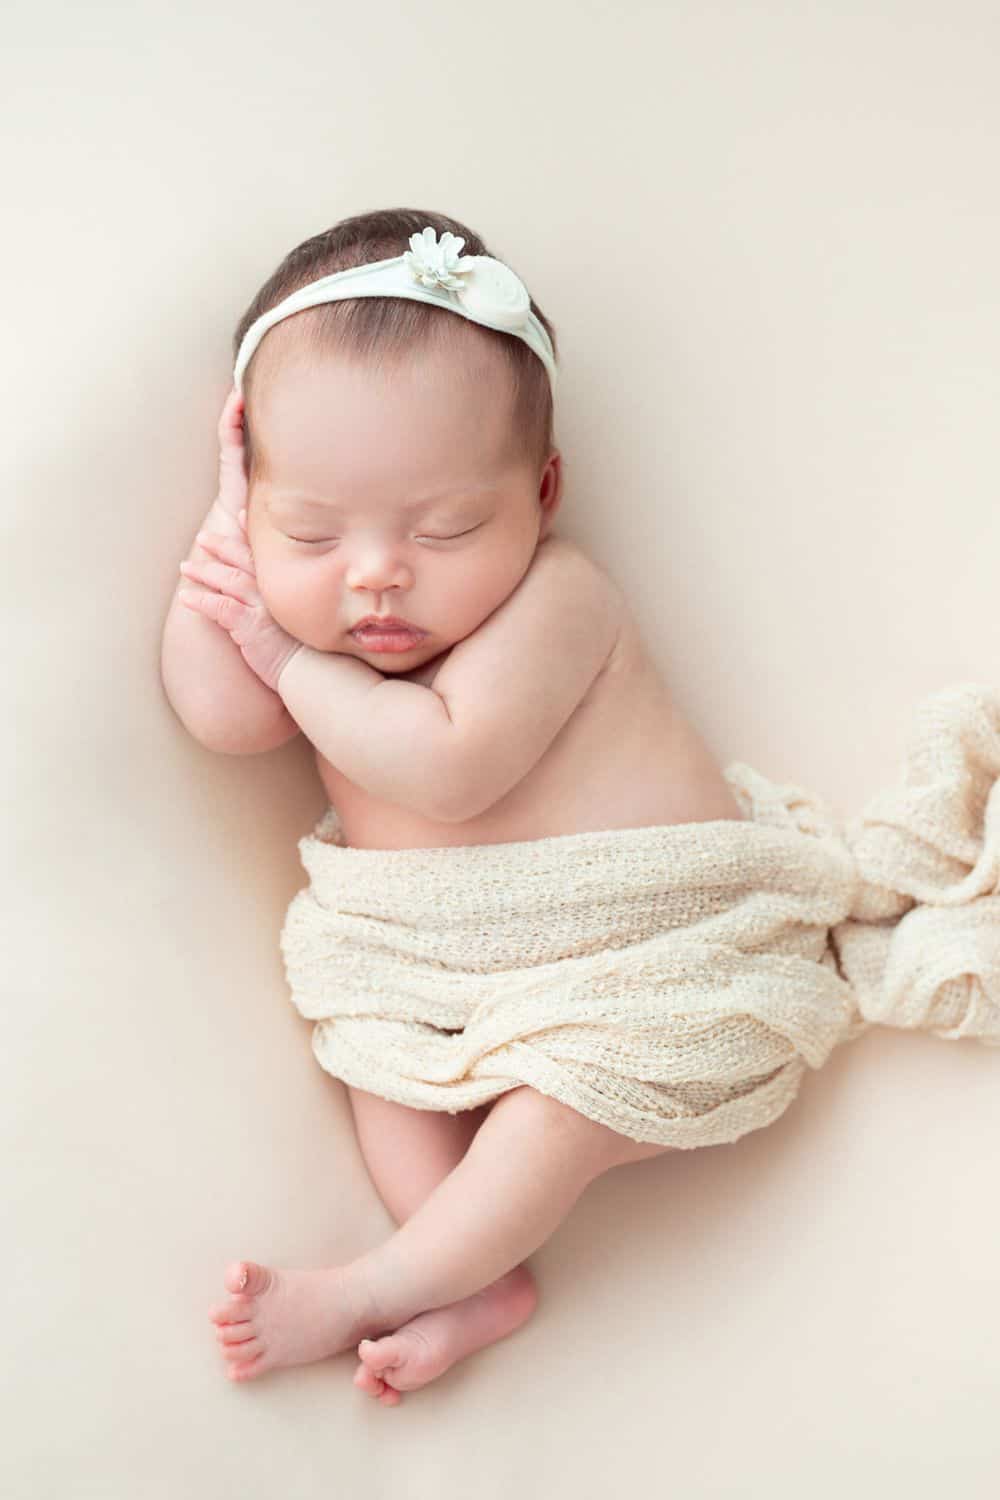 Newborn baby girl with cream headband and cloth wrap around waist. Pretty girl names that start with S.